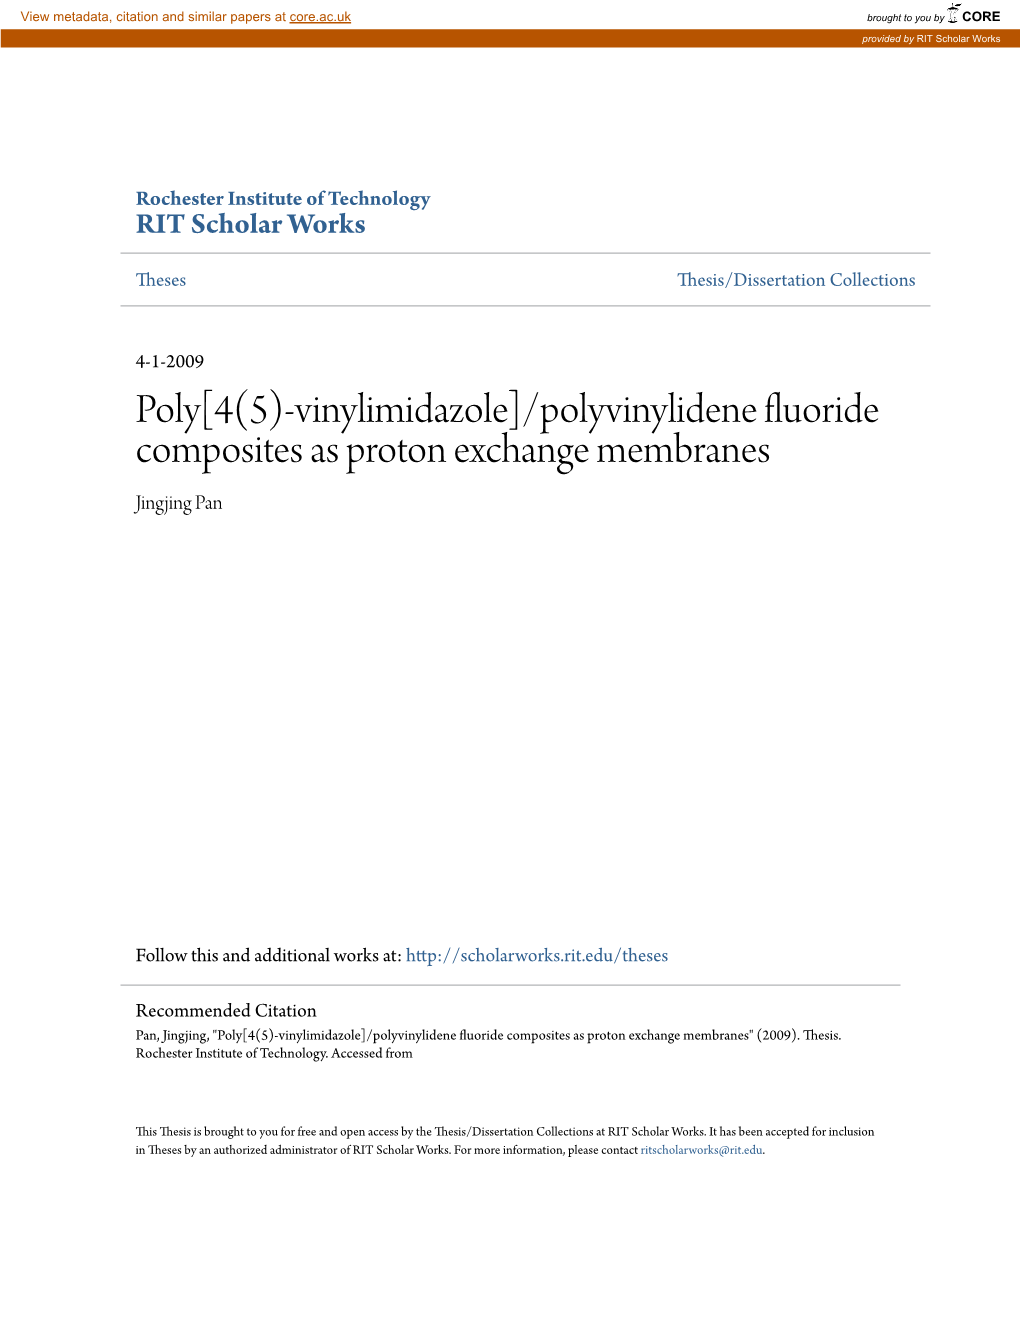 Poly[4(5)-Vinylimidazole]/Polyvinylidene Fluoride Composites As Proton Exchange Membranes Jingjing Pan